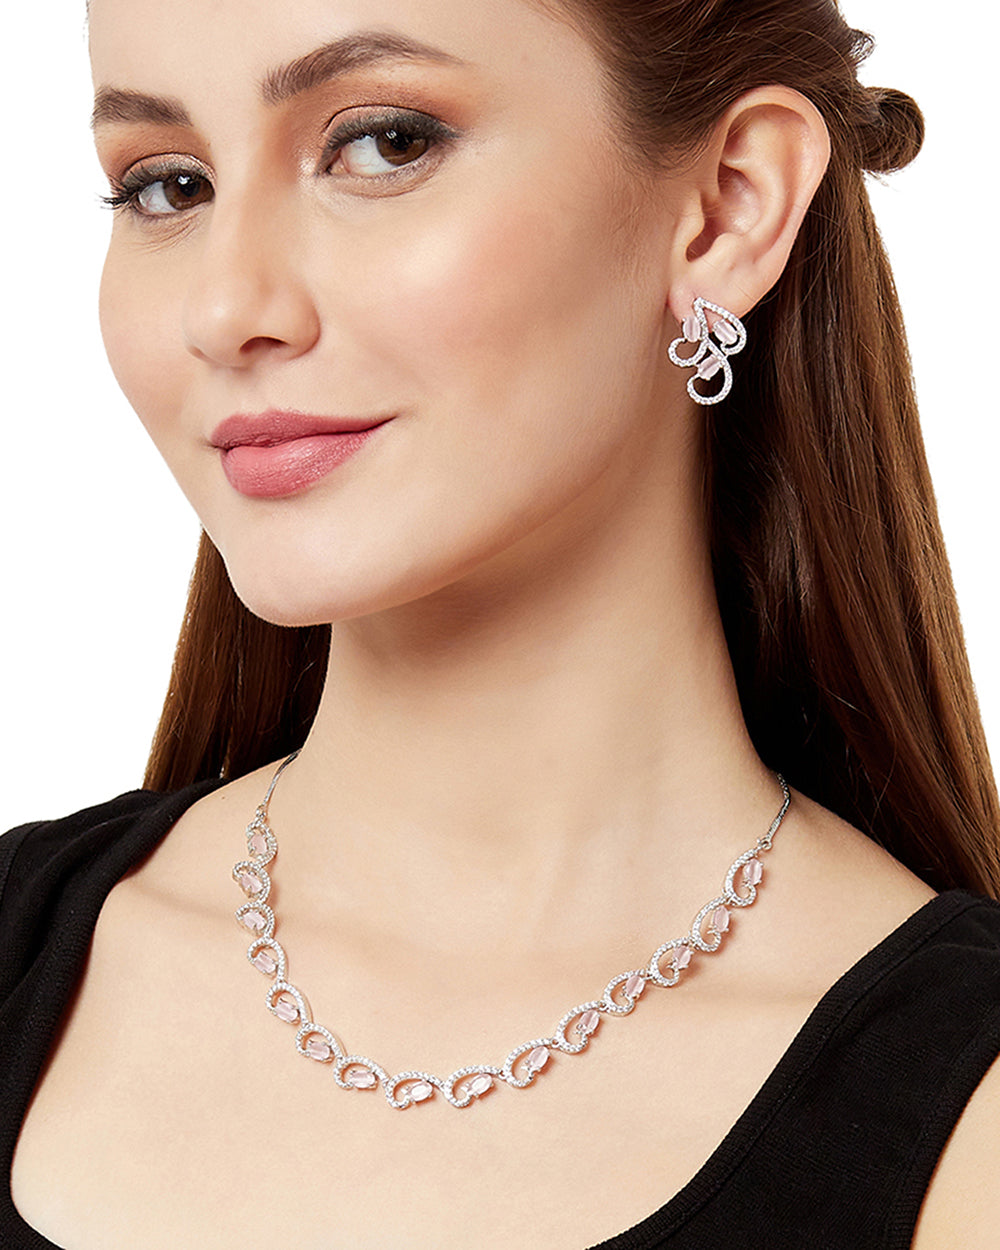 Women's Sparkling Elegance Eye-Catching Necklace Set Studded With Cz Stones - Voylla